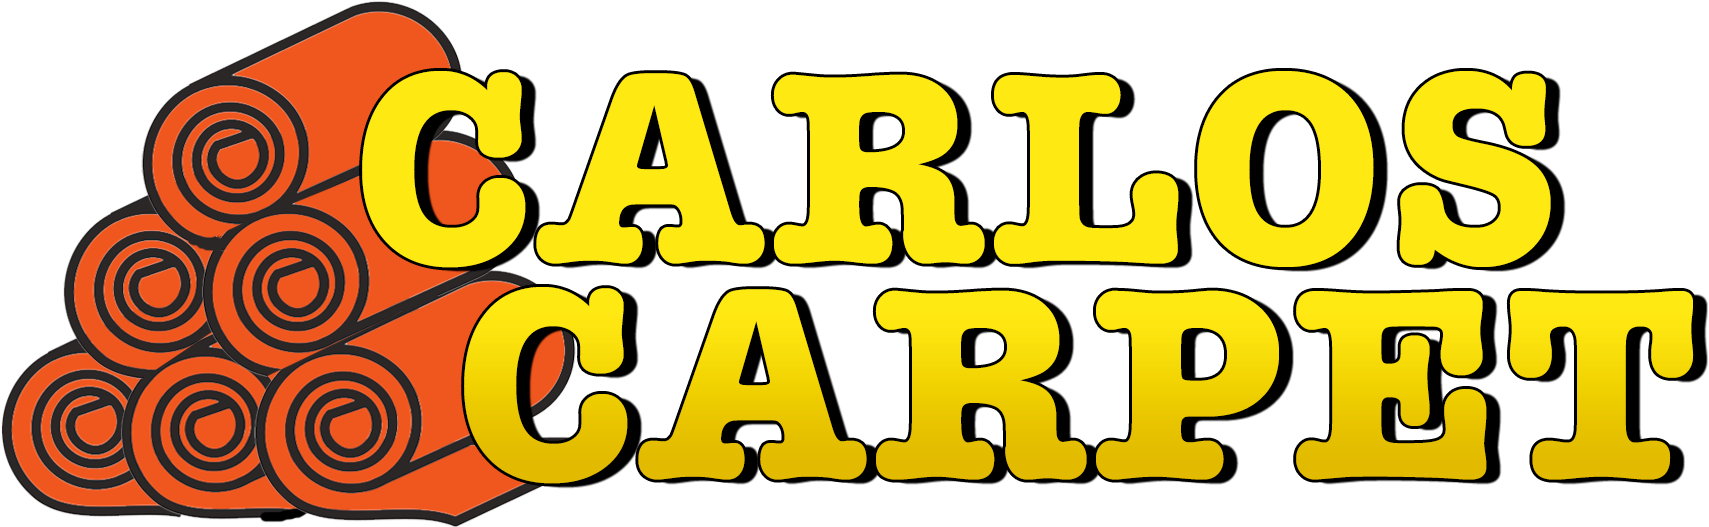 Carlos Carpet Service - Carlos Carpet Services (1800x600)